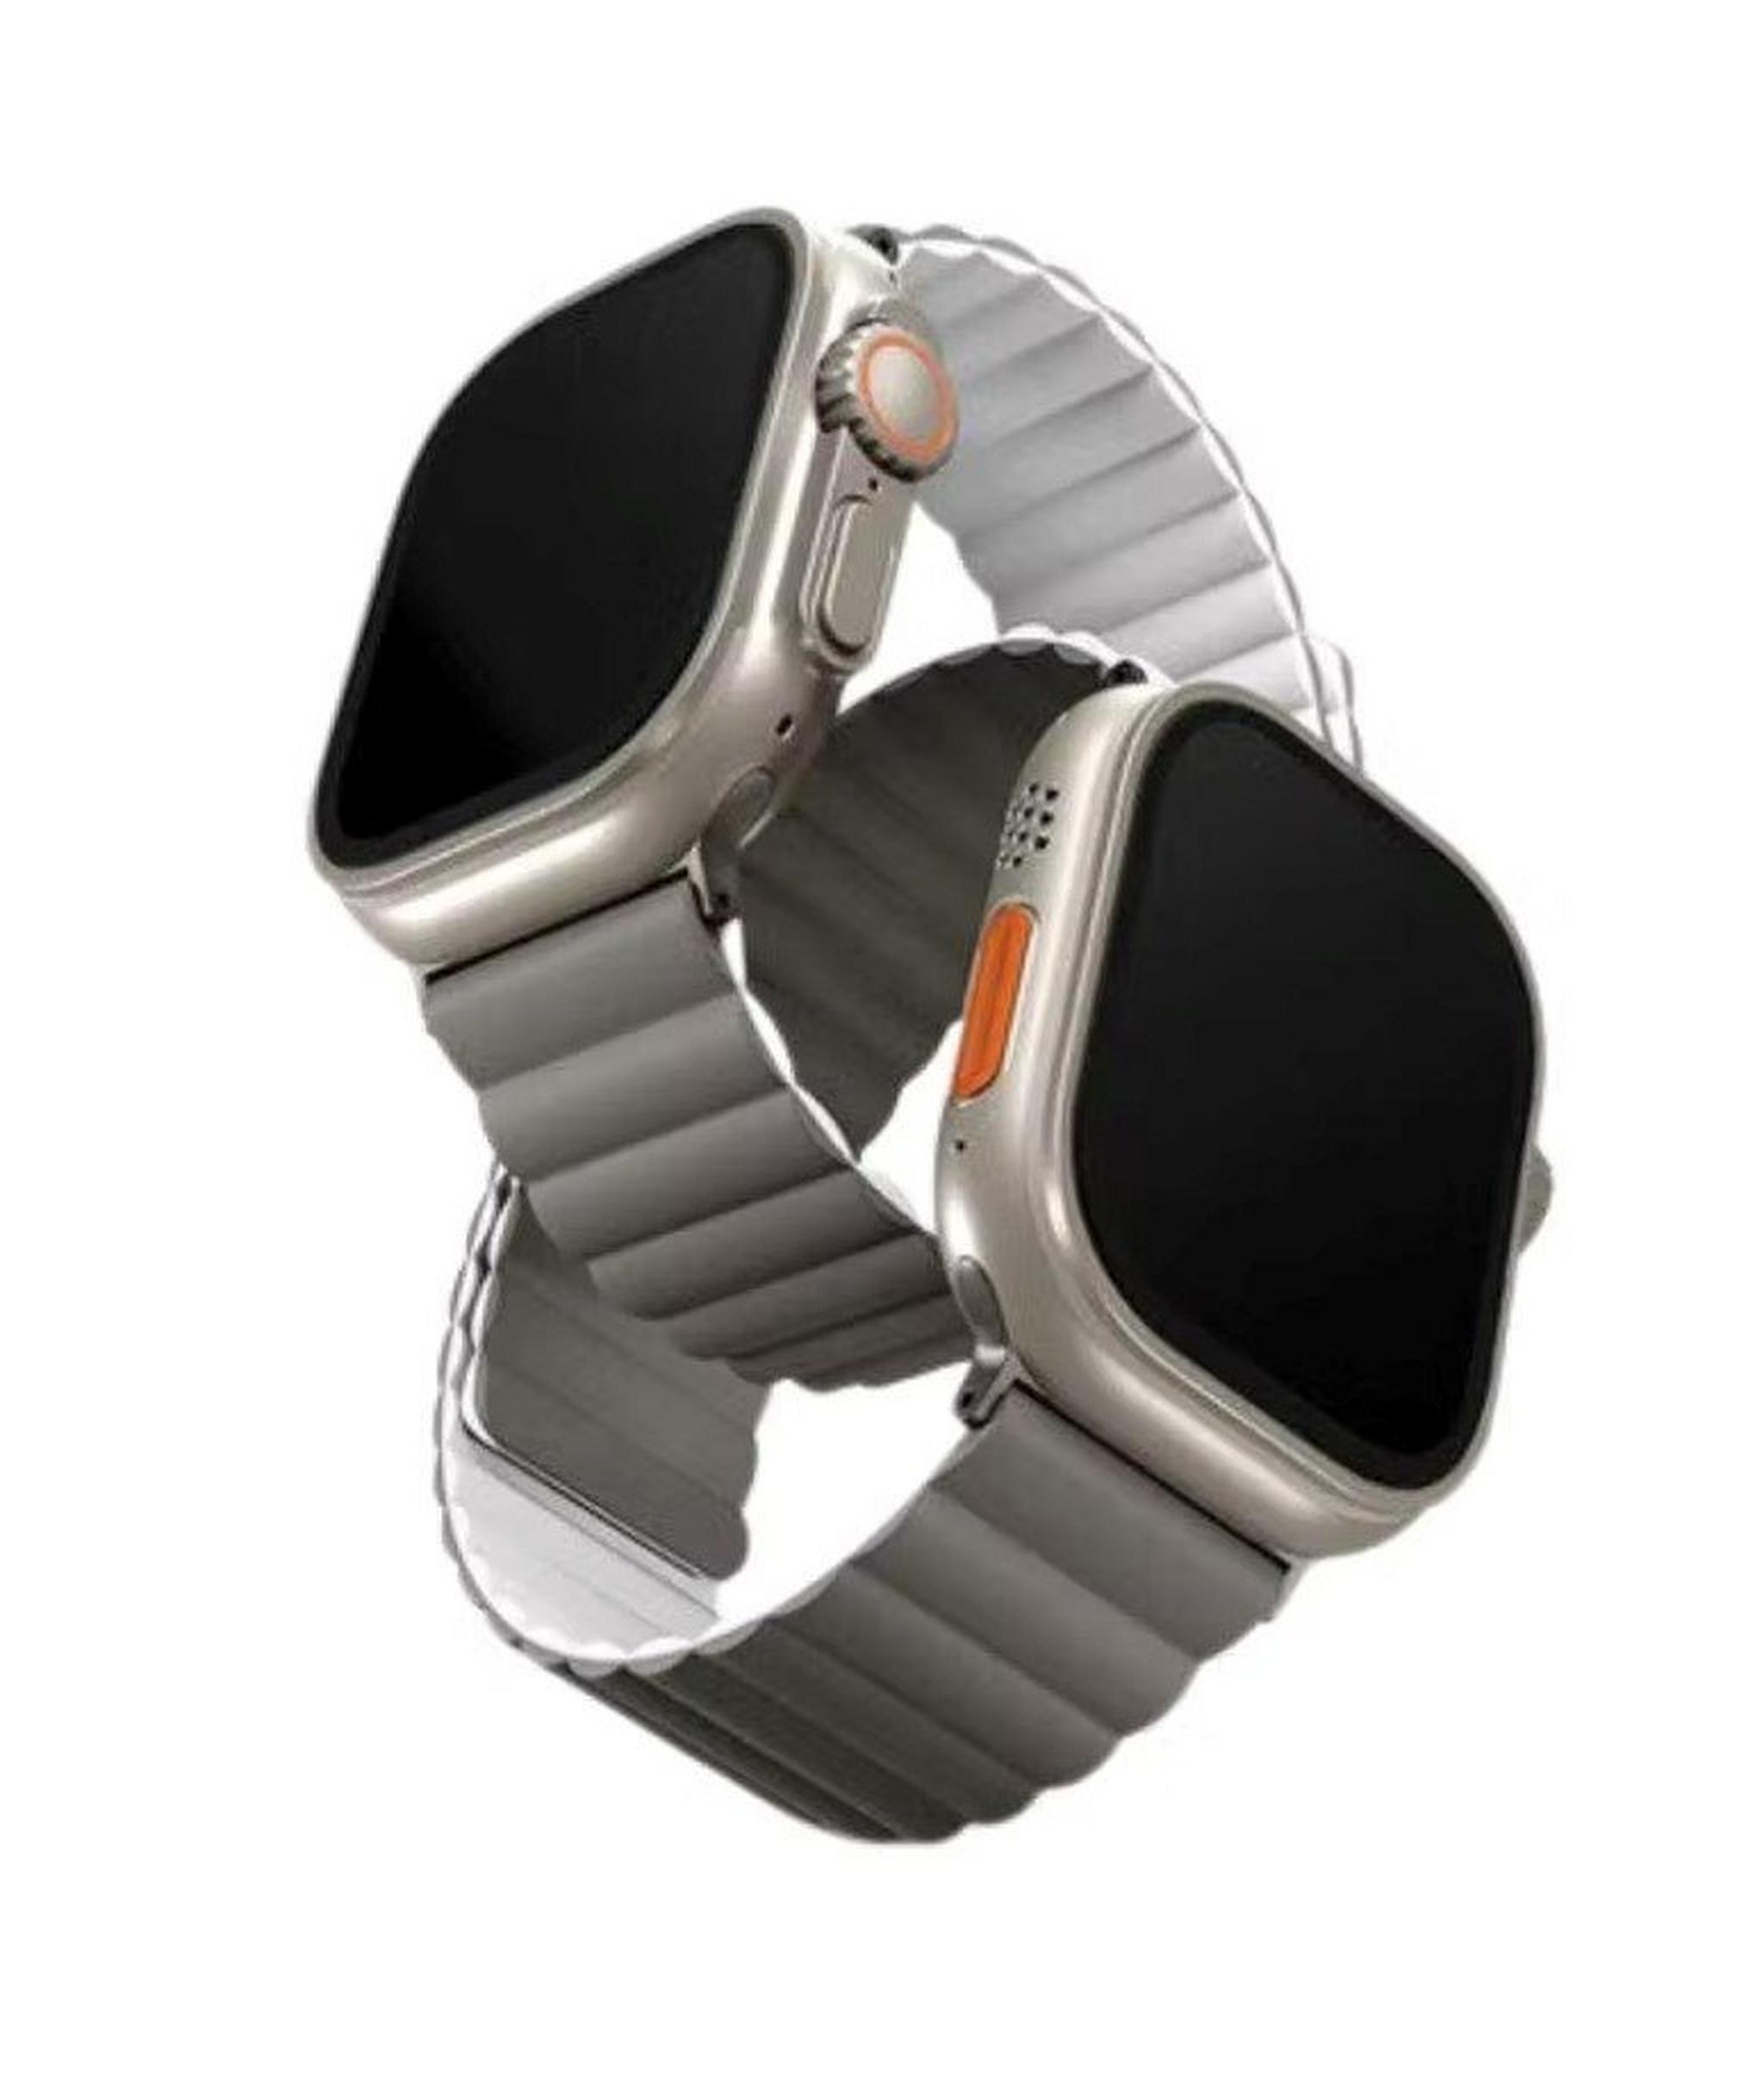 Uniq Revix 49/45/44/42mm Reversible Apple Watch Strap, 8886463683934 – Grey / White